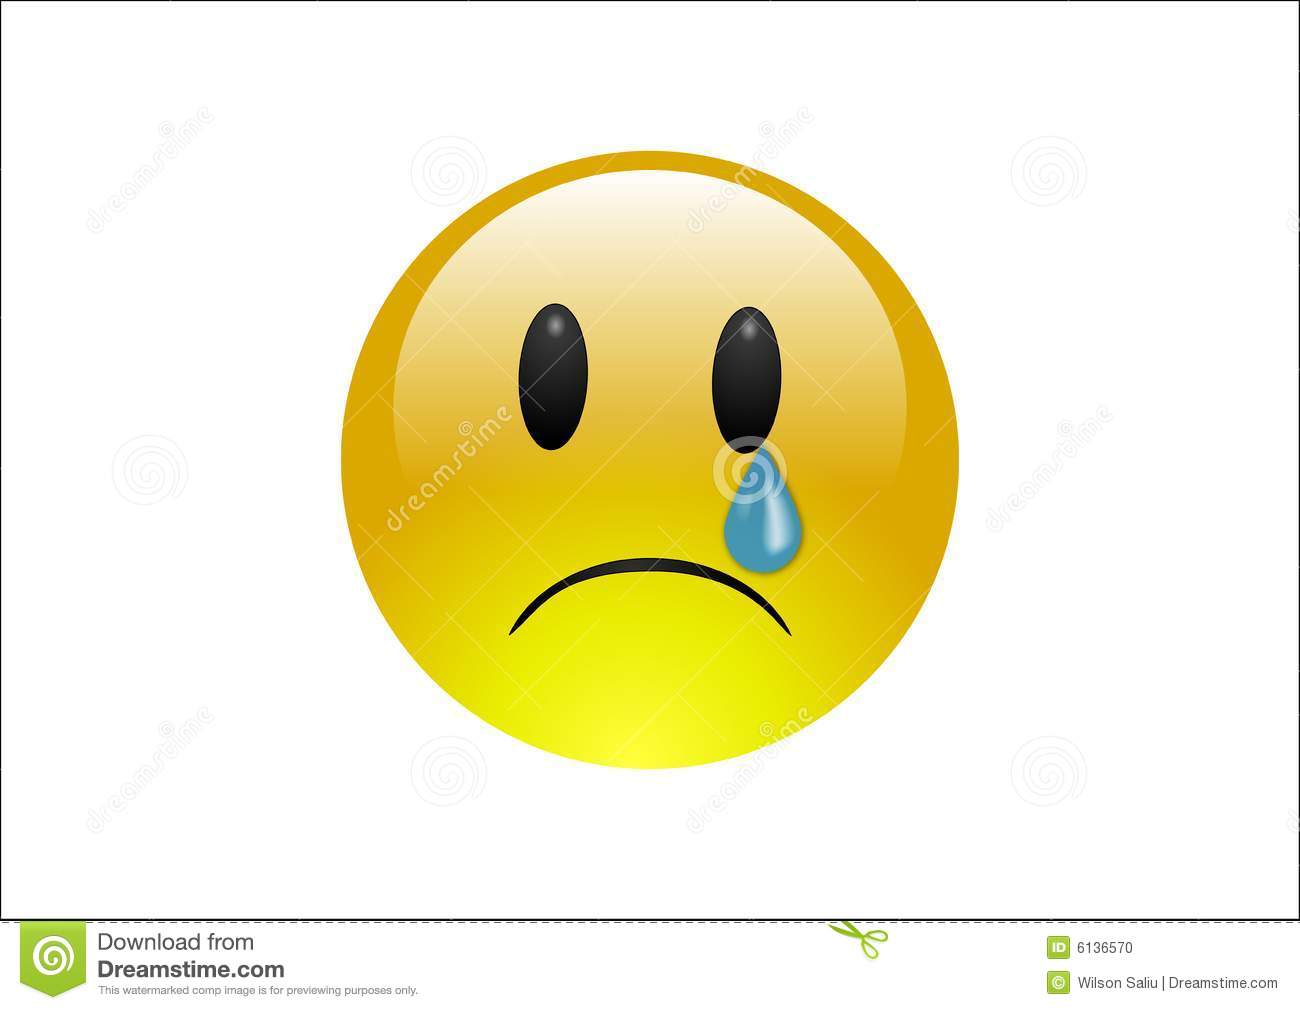 Sad Crying Face Emoticon